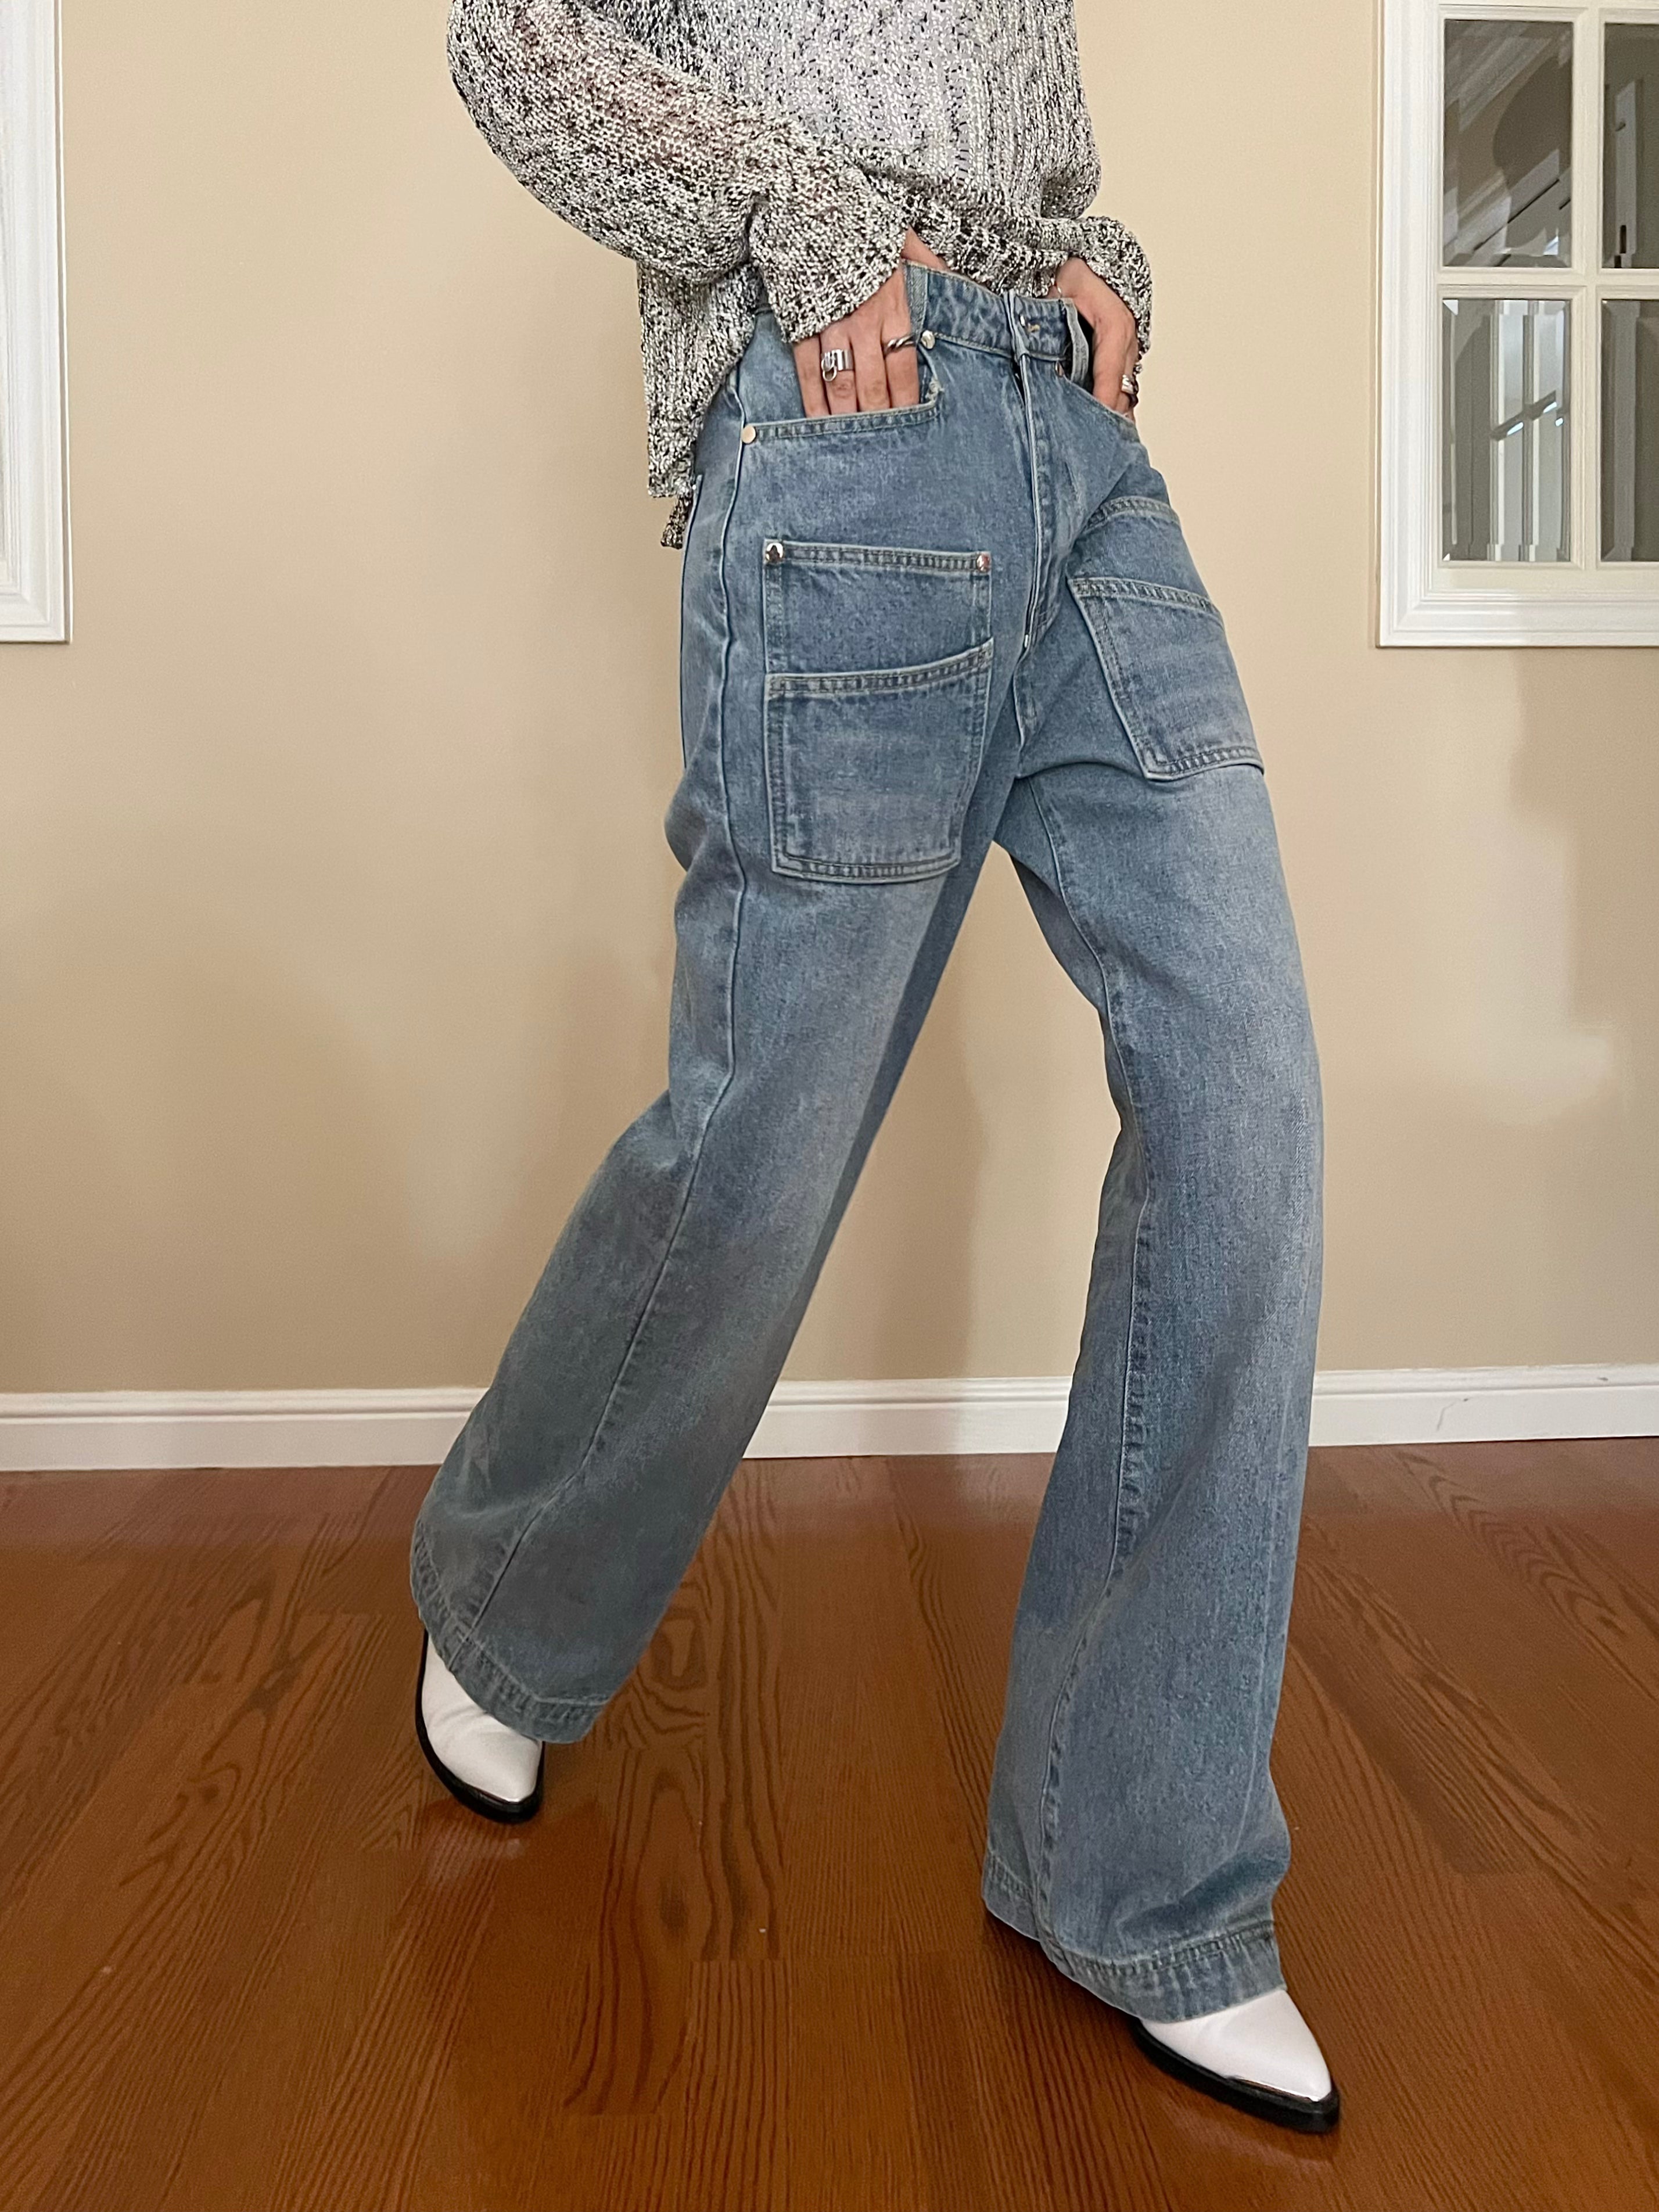 The Pocket Jeans